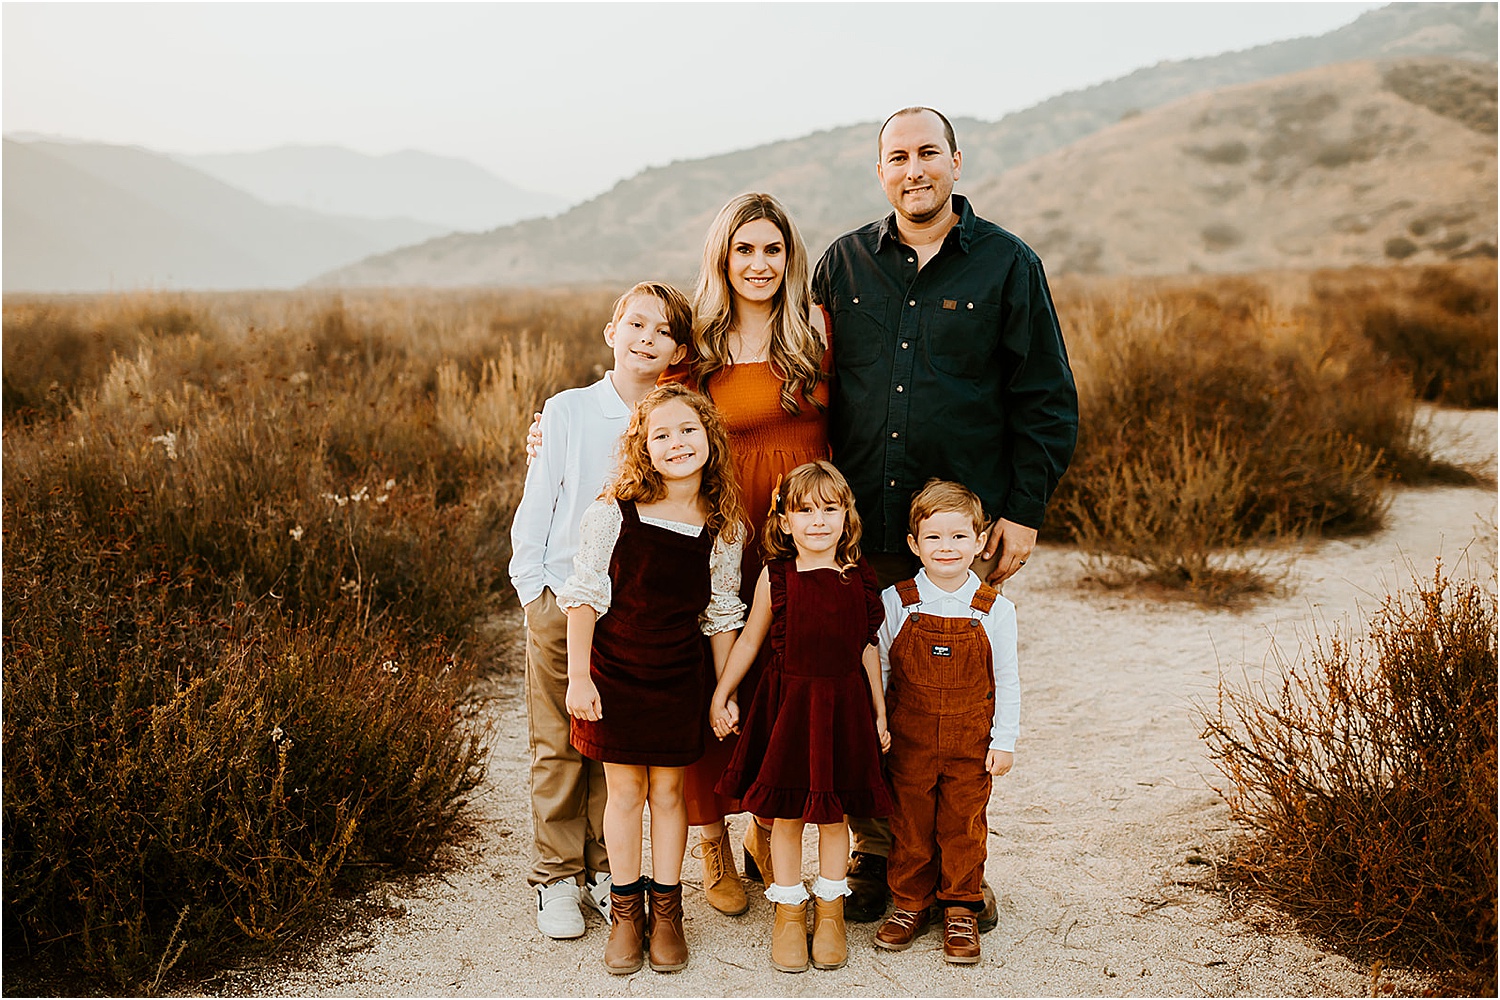 Sunset family portraits captured by Spokane family photographer Jade Averill Photography